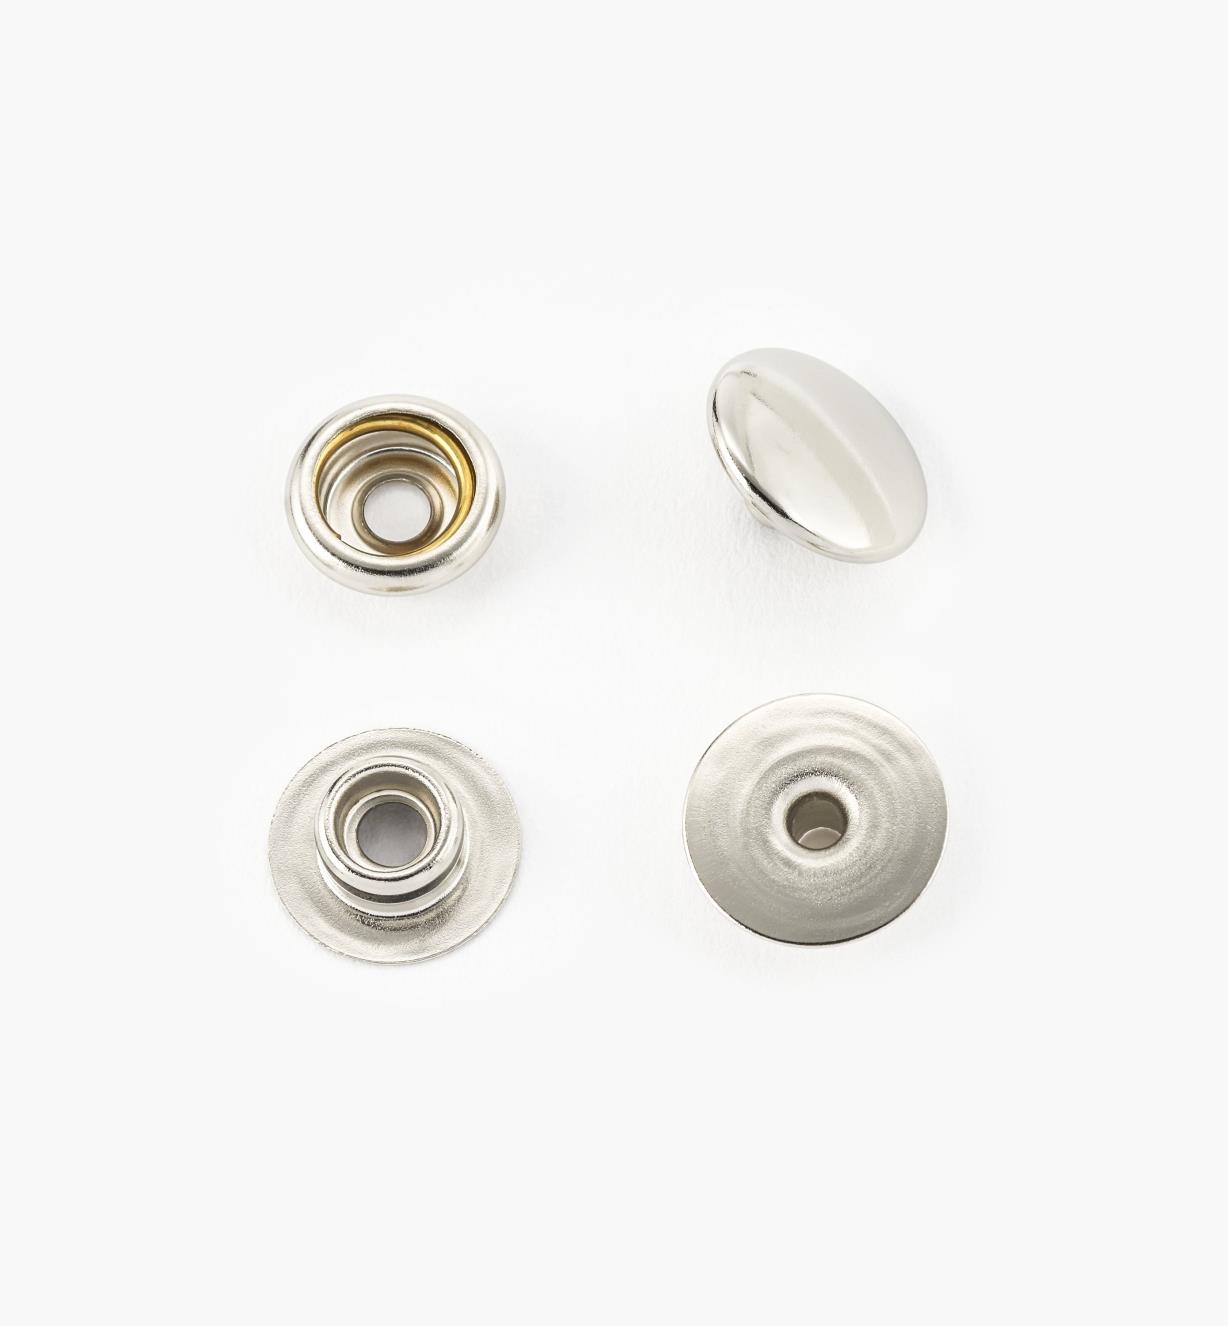 97K0980 - CS Osborne Nickel-Plated Brass 1/2" Snap Buttons (25)